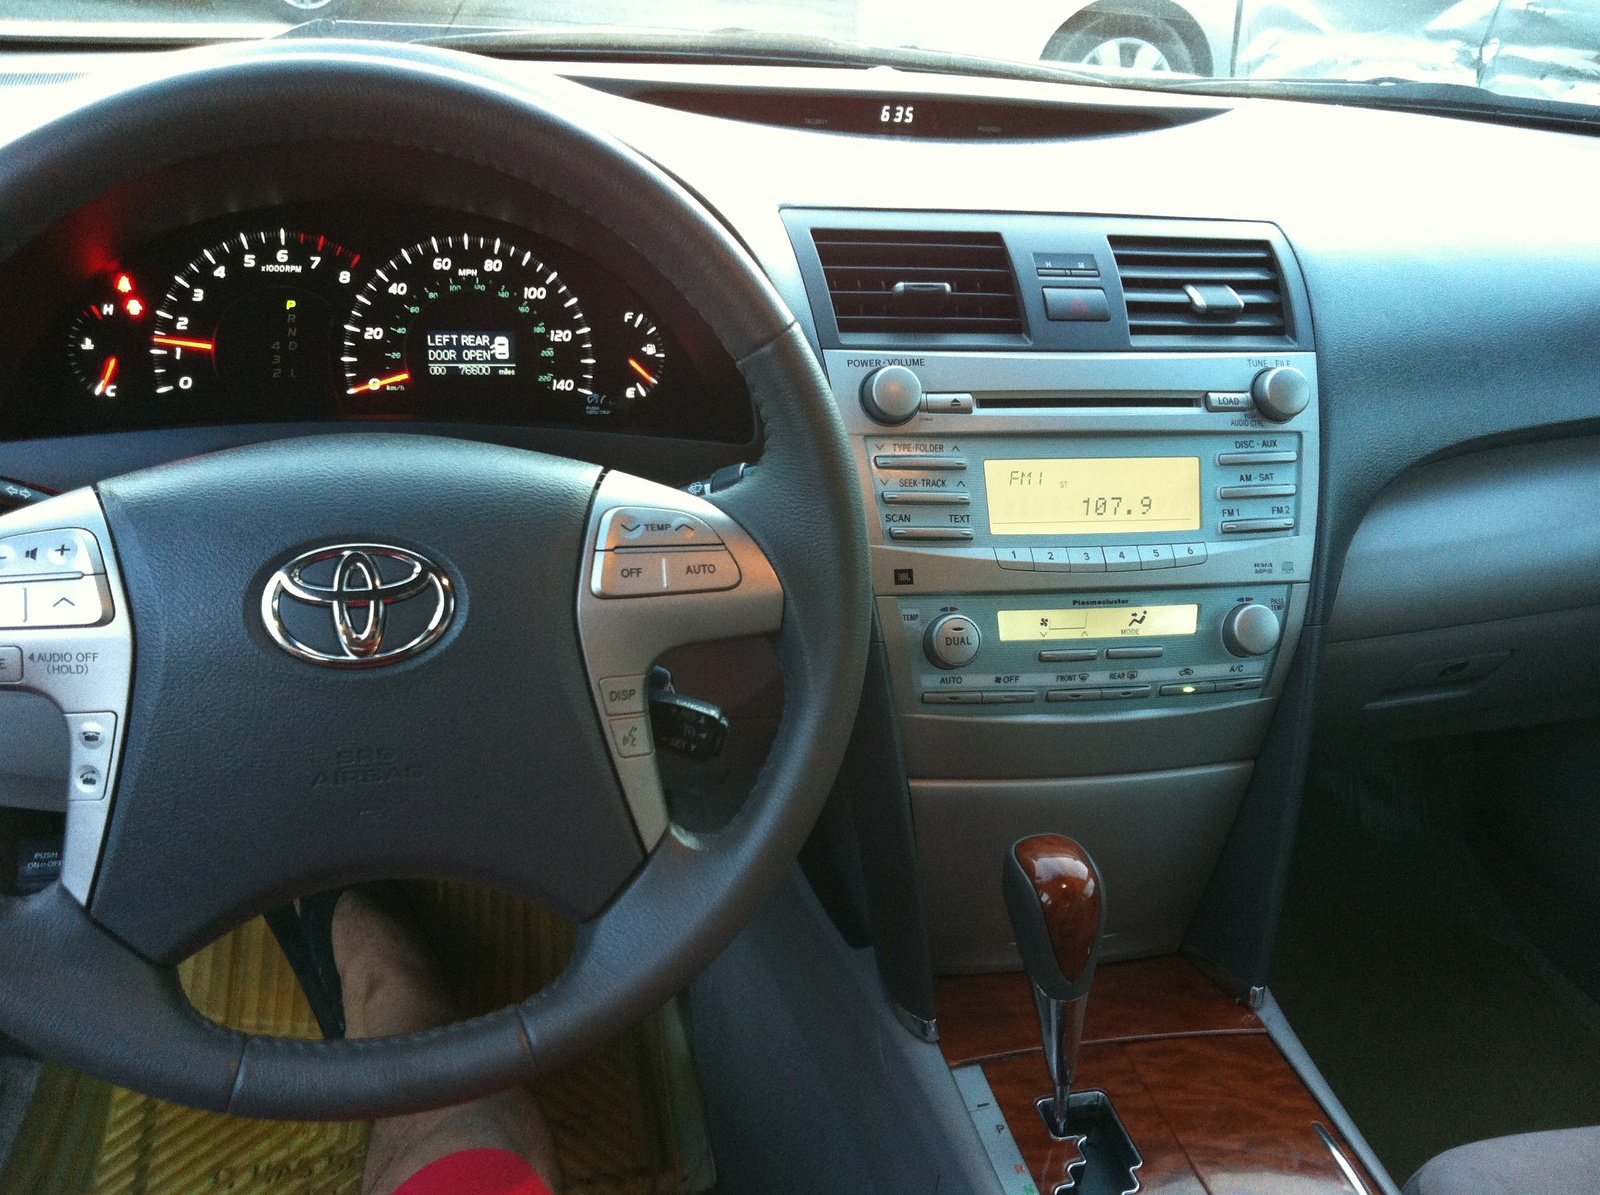 Торпеда камри 40. Панель Тойота Камри 40. Панель Toyota Camry 40. Toyota Camry 2008 XLE. Камри 40 2008.